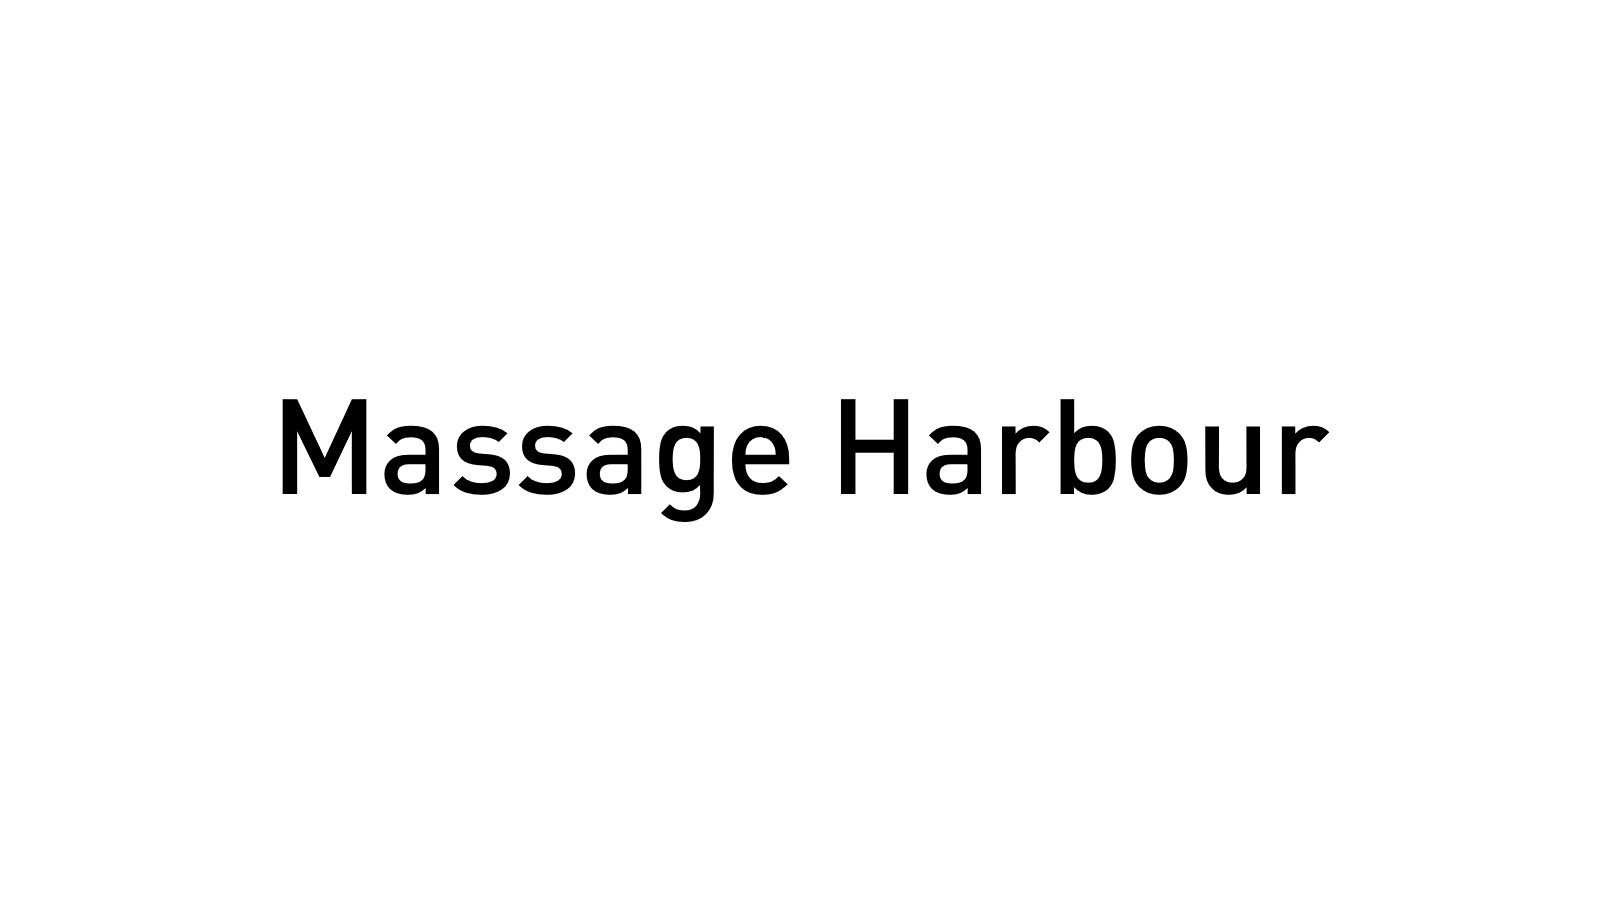 {"Text":"","URL":"https://www.rhtc.com.au/stores-services/massage-harbour","OpenNewWindow":false}